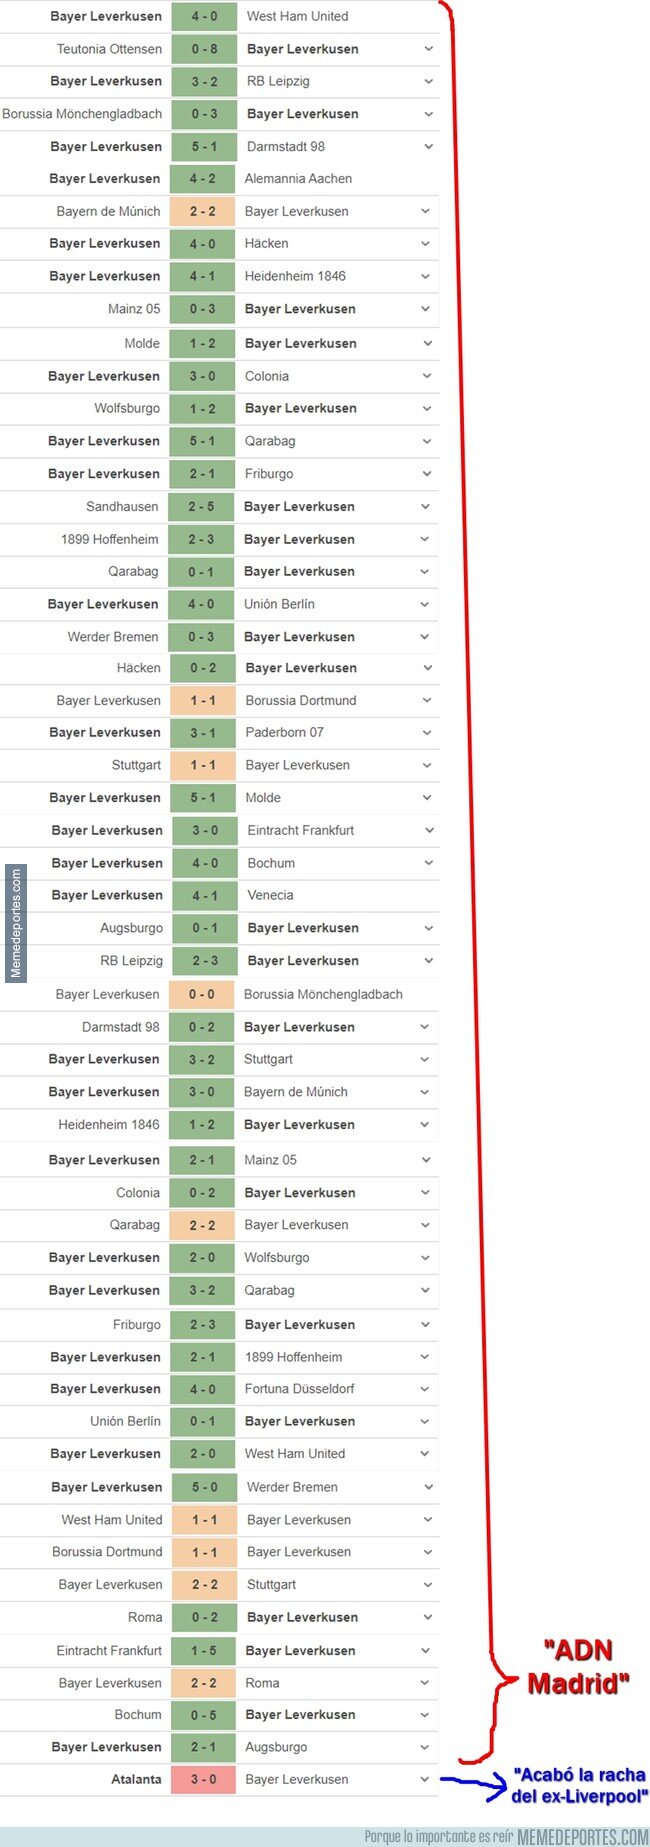 1205115 - La lista entera de la temporada del Leverkusen